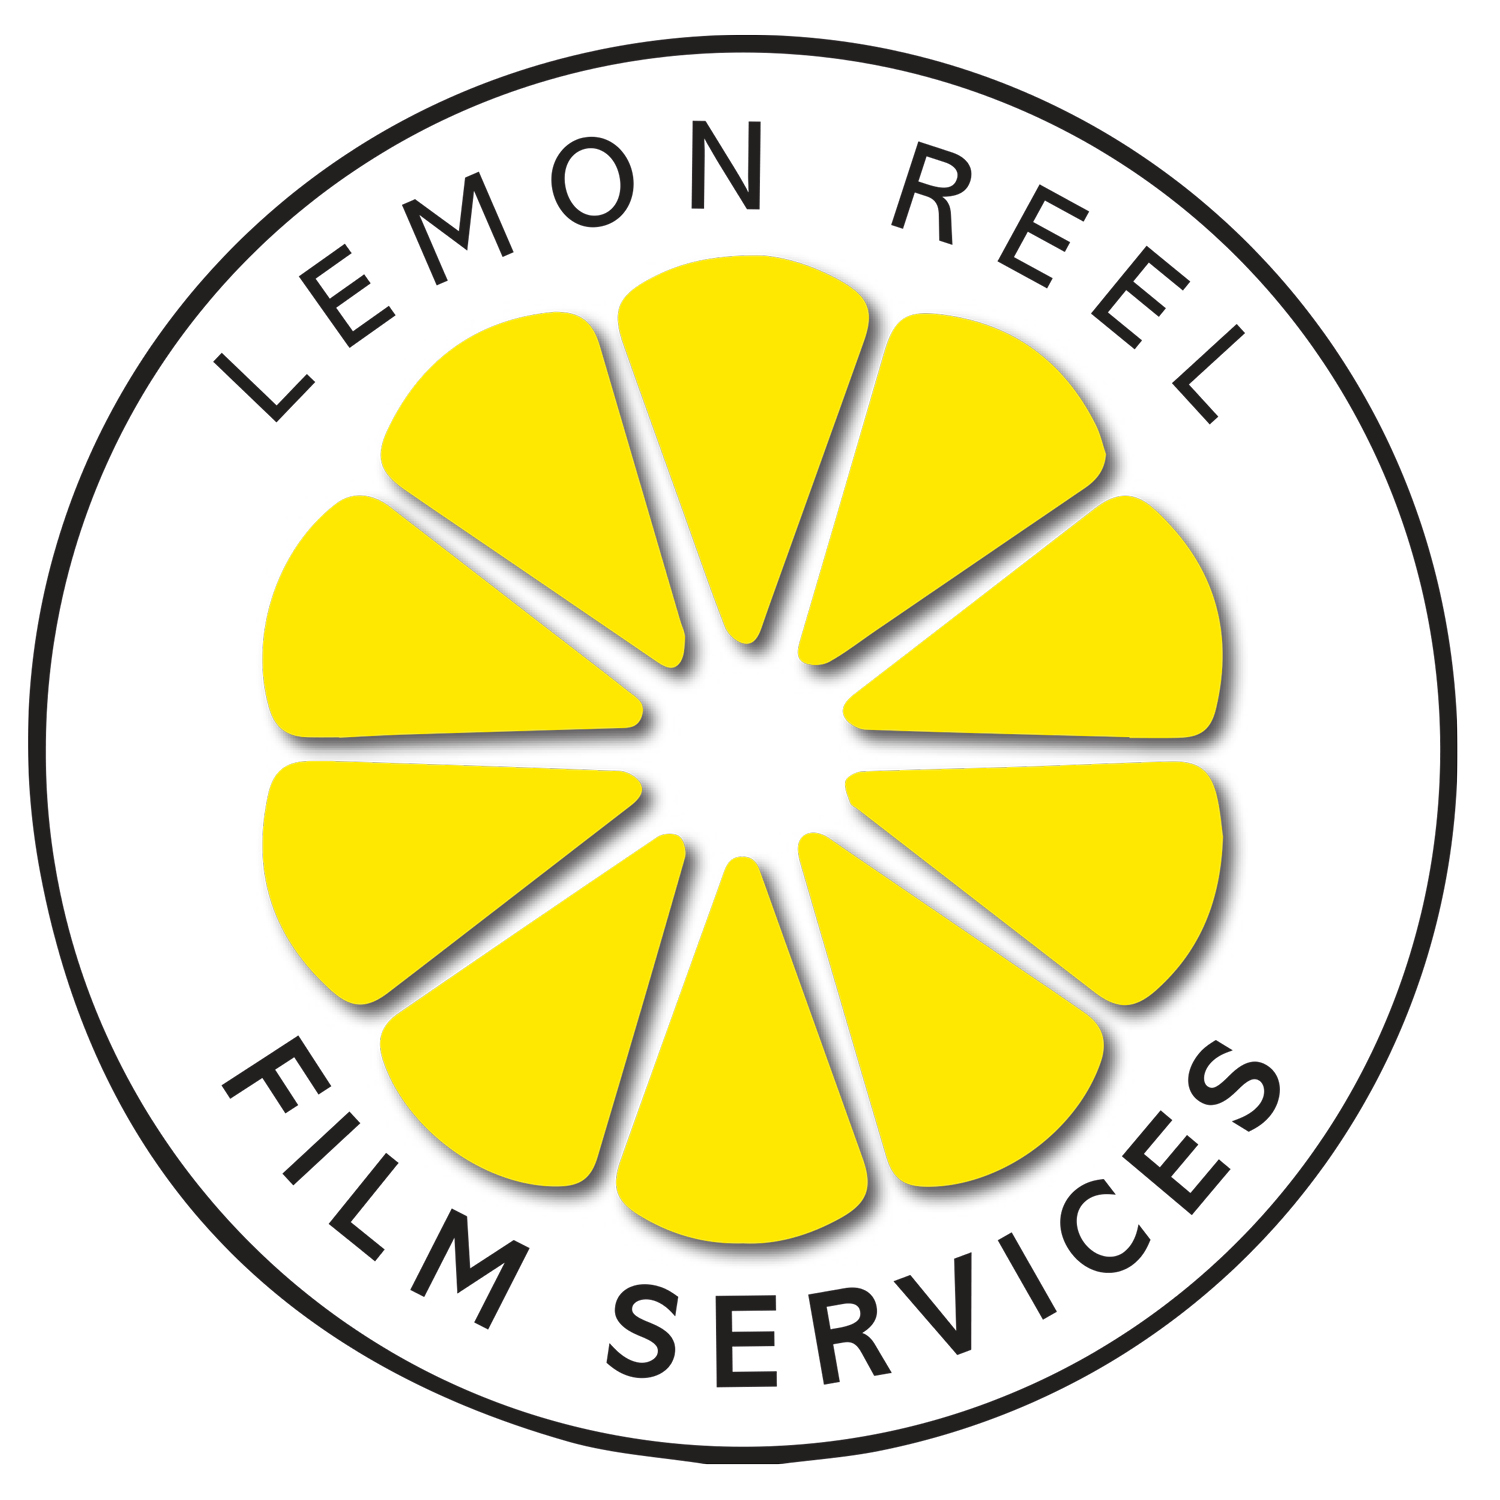 Lemon Reel